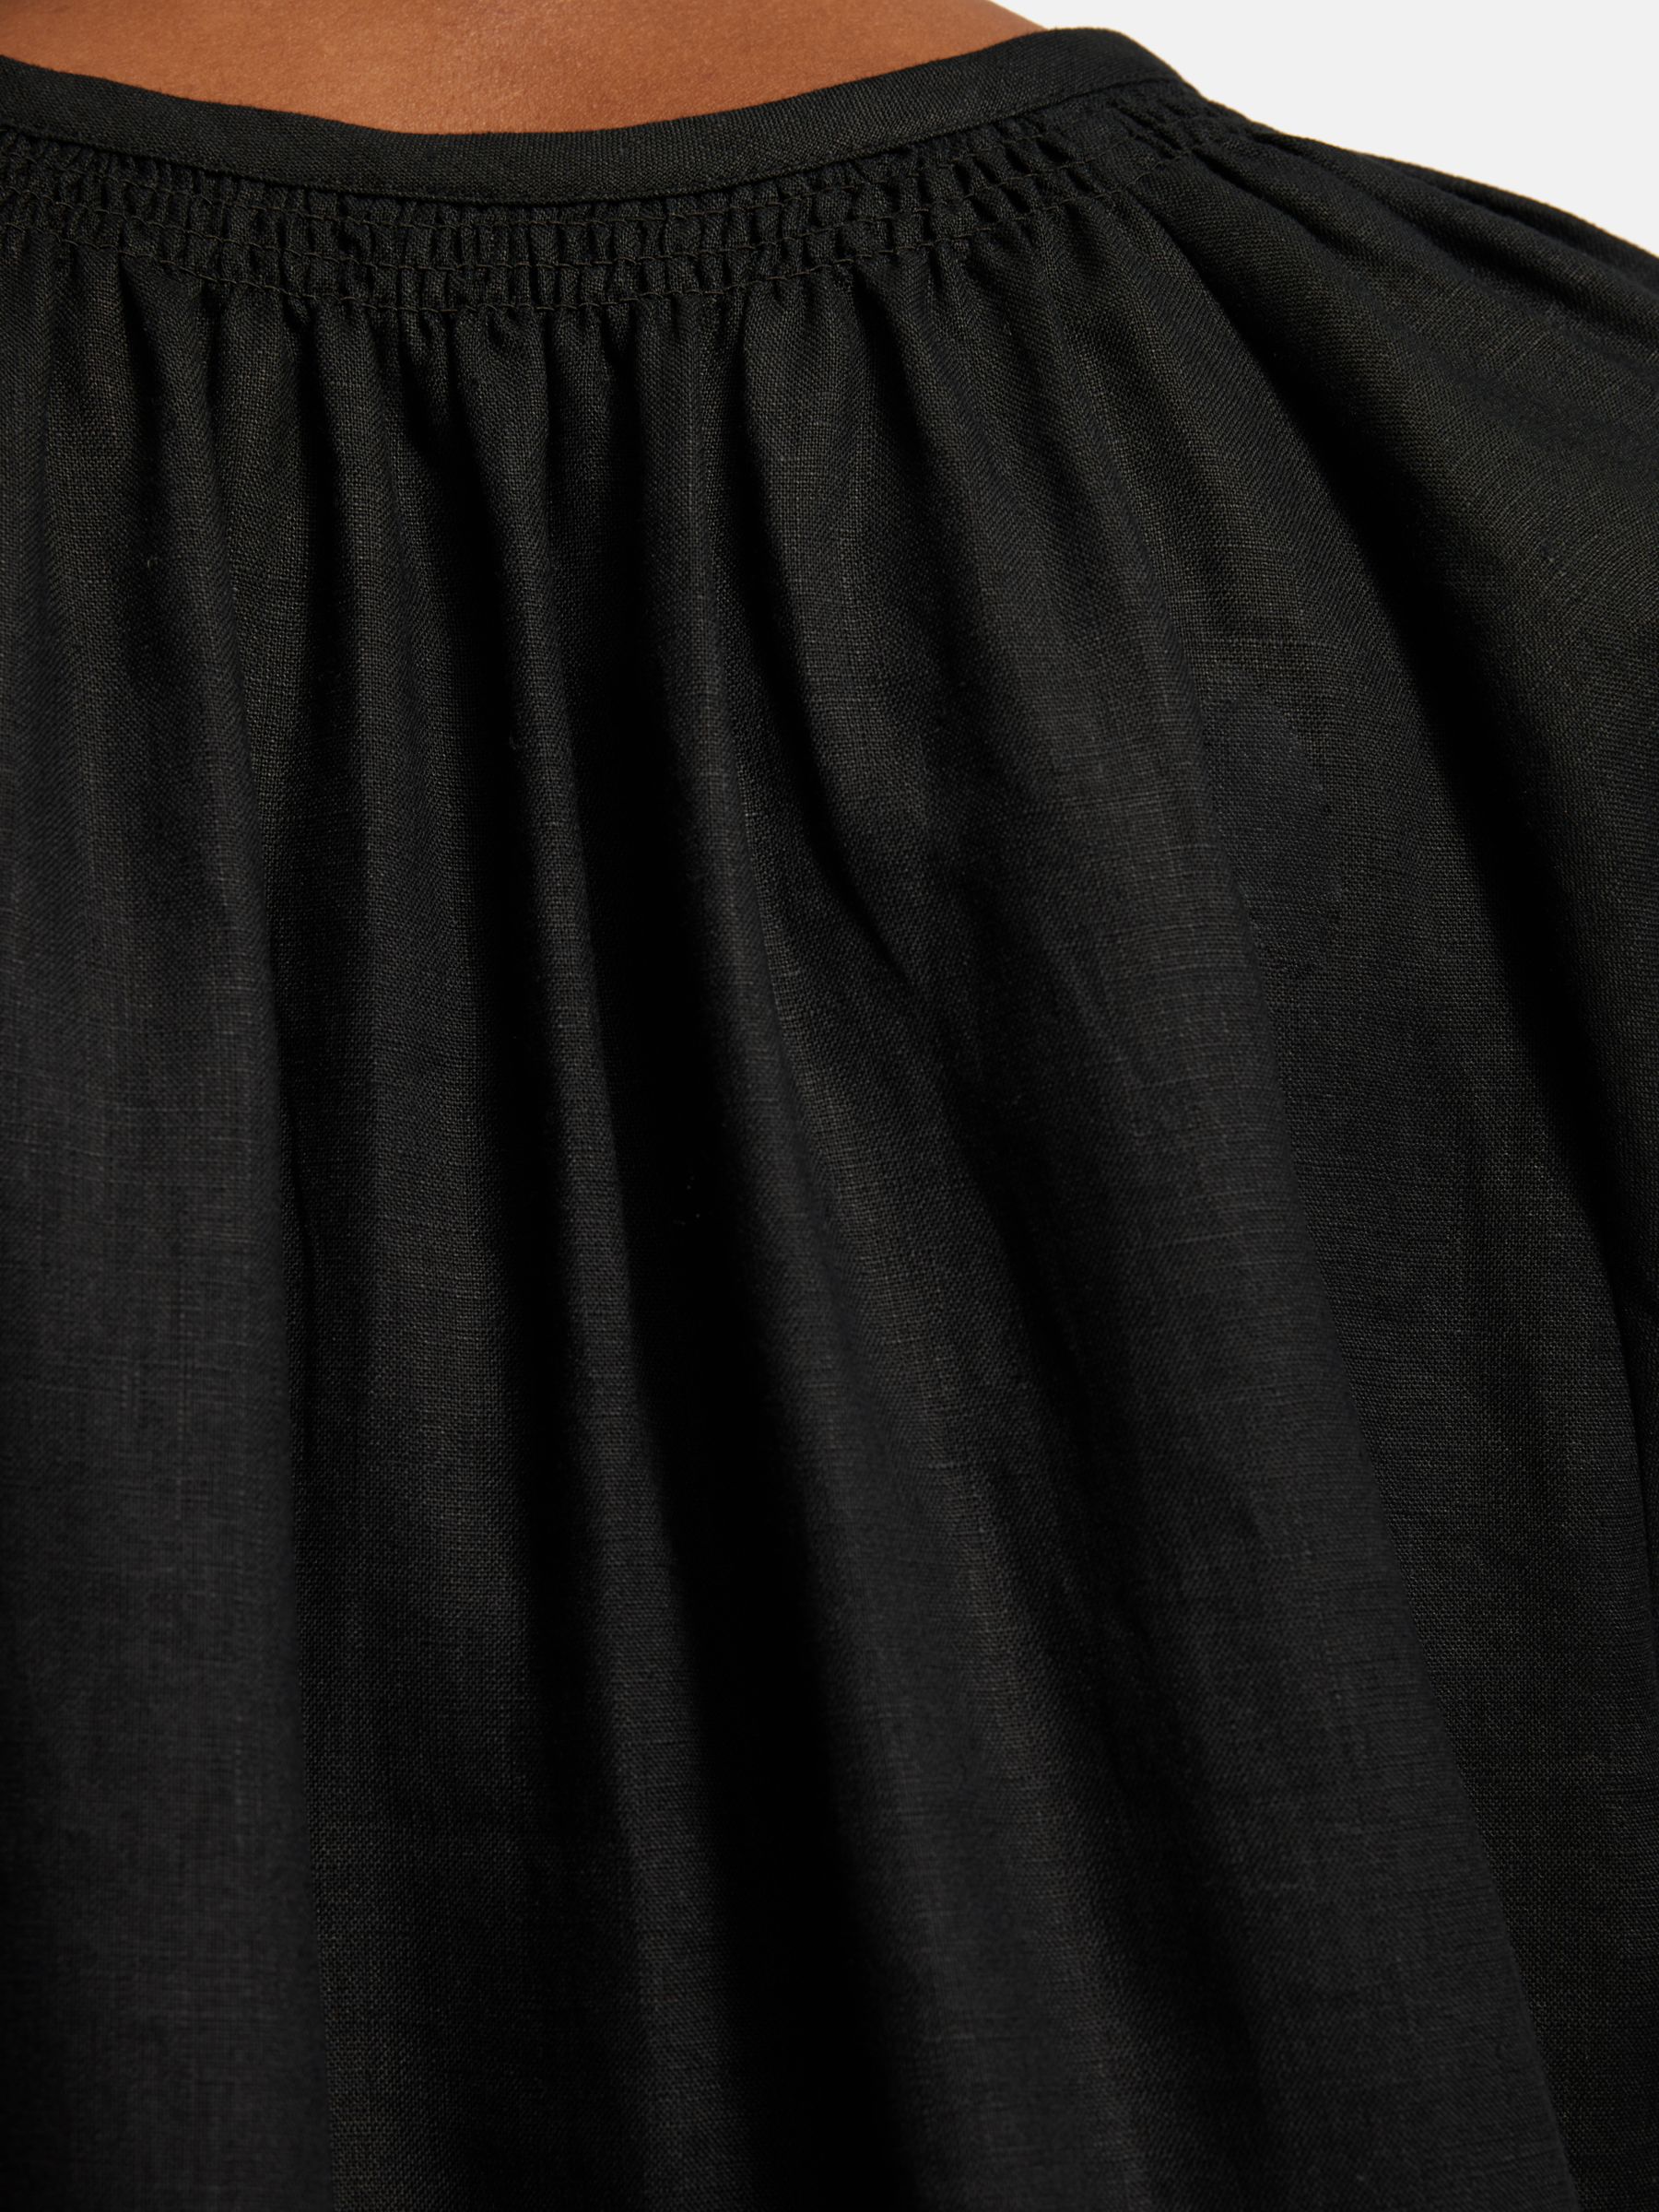 Jigsaw Smocked Linen Dress, Black, 10